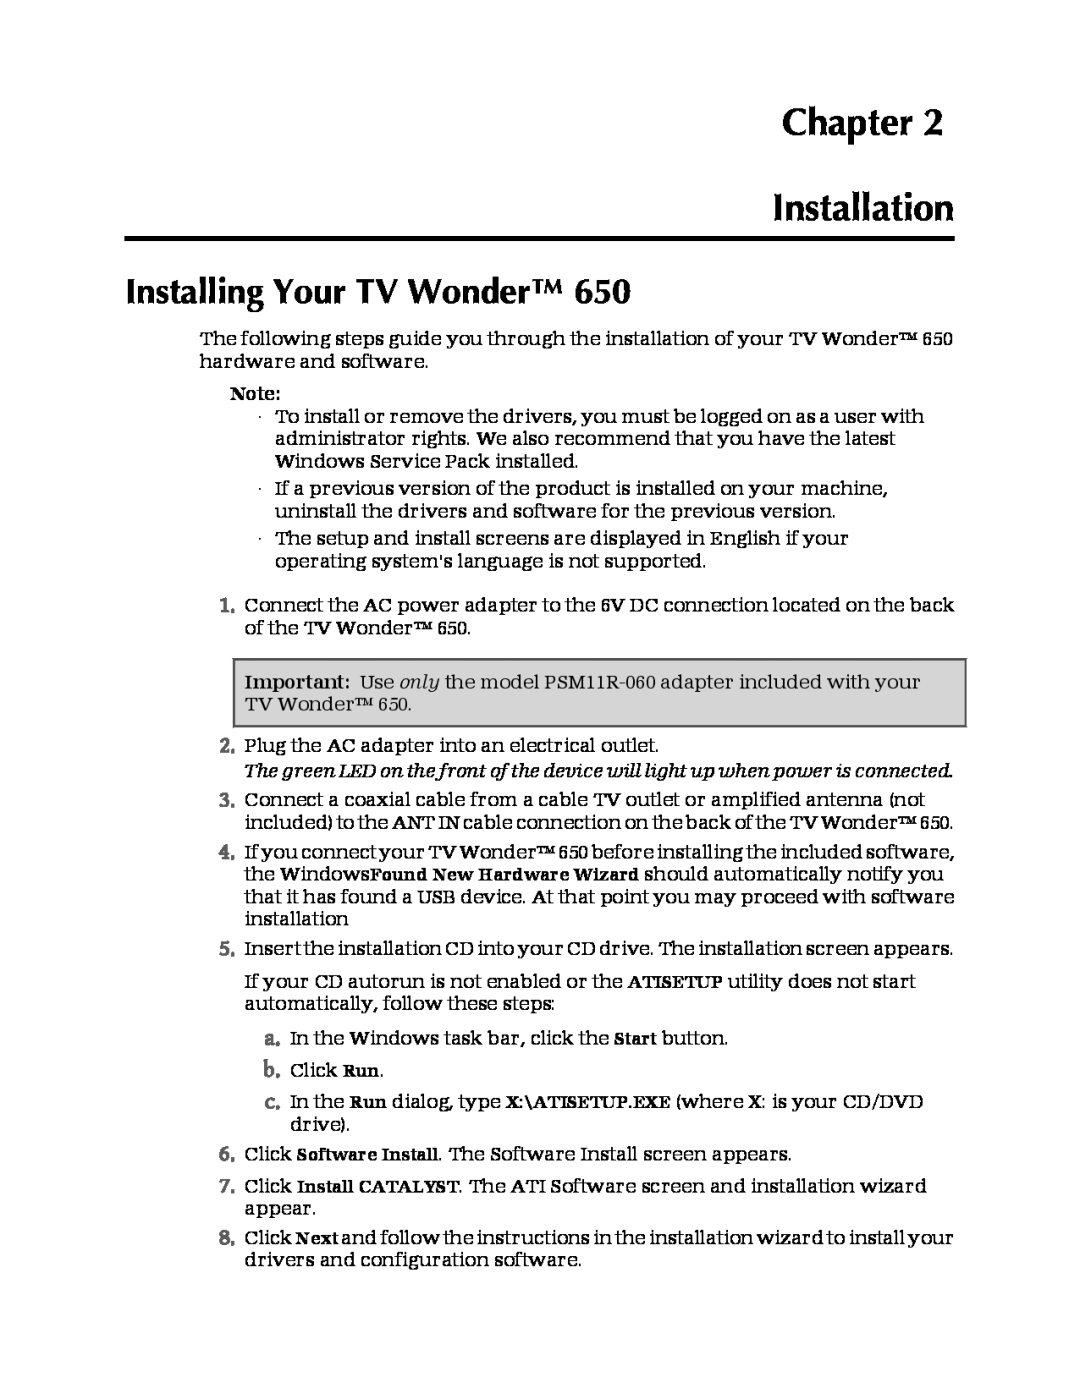 AMD 650 manual Chapter Installation, Installing Your TV Wonder 